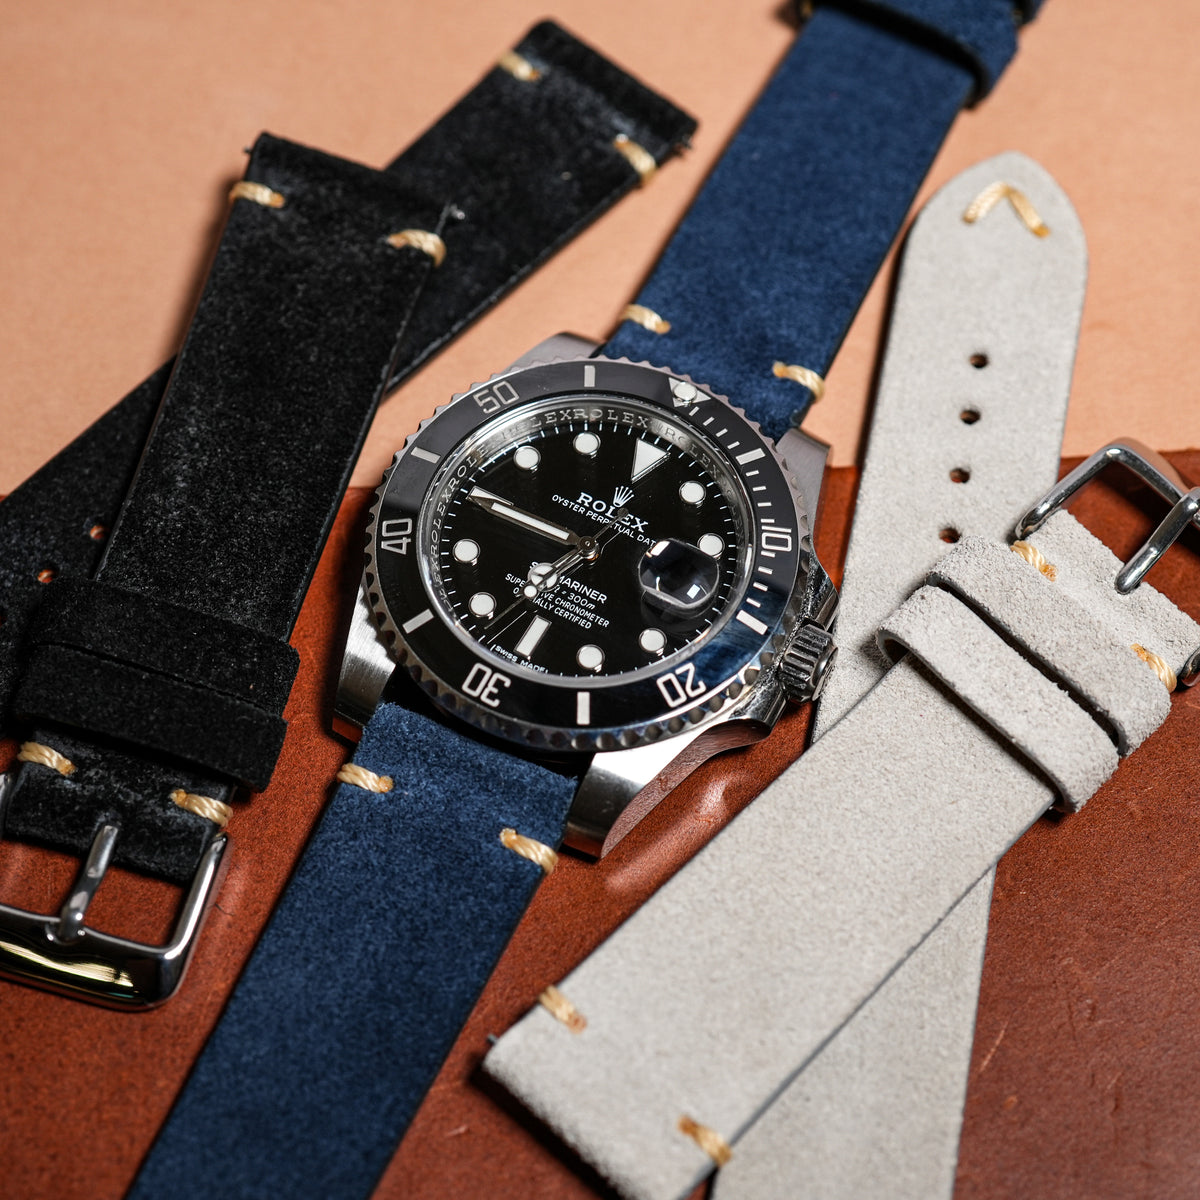 Premium Vintage Suede Leather Watch Strap in Navy